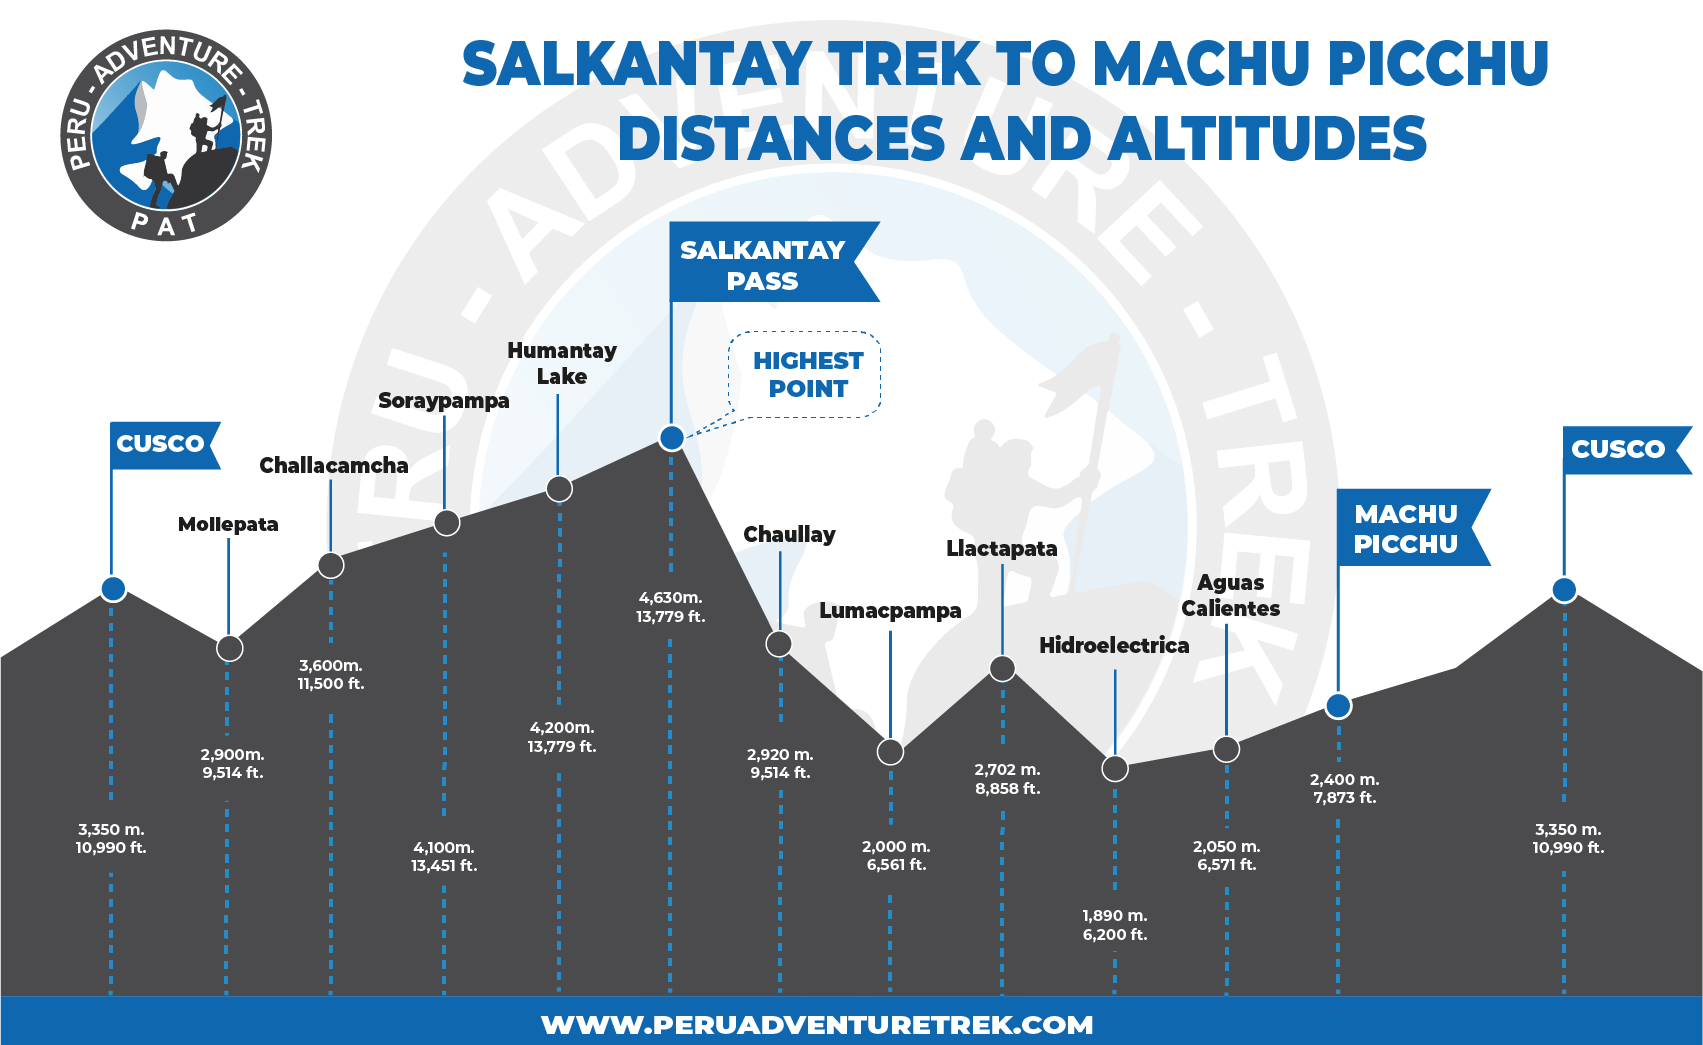 Salkantay Trek Distances and Altitudes along the trek to Machu Picchu